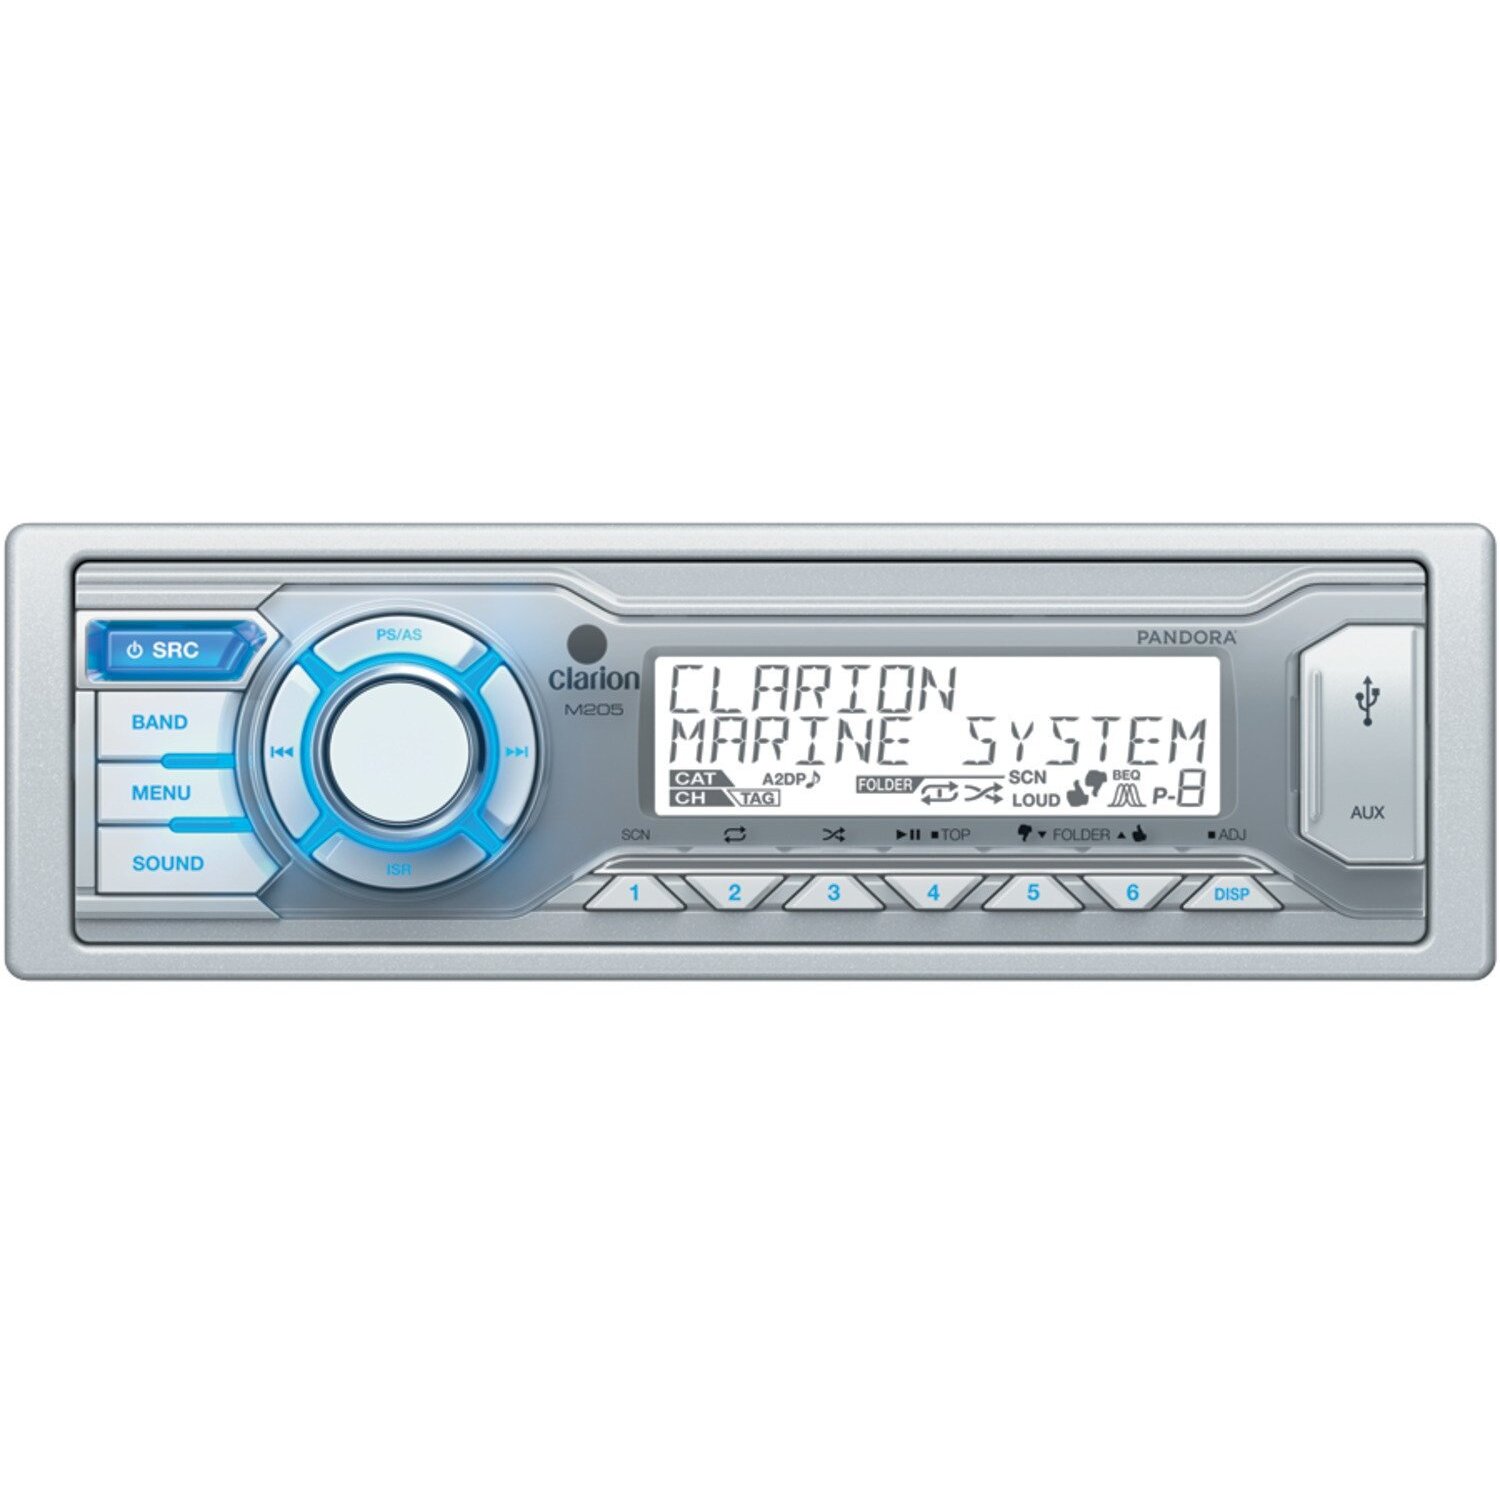 Clarion M205 AM/FM Radio Receiver USB Port Pandora 200 Watt Marine Stereo